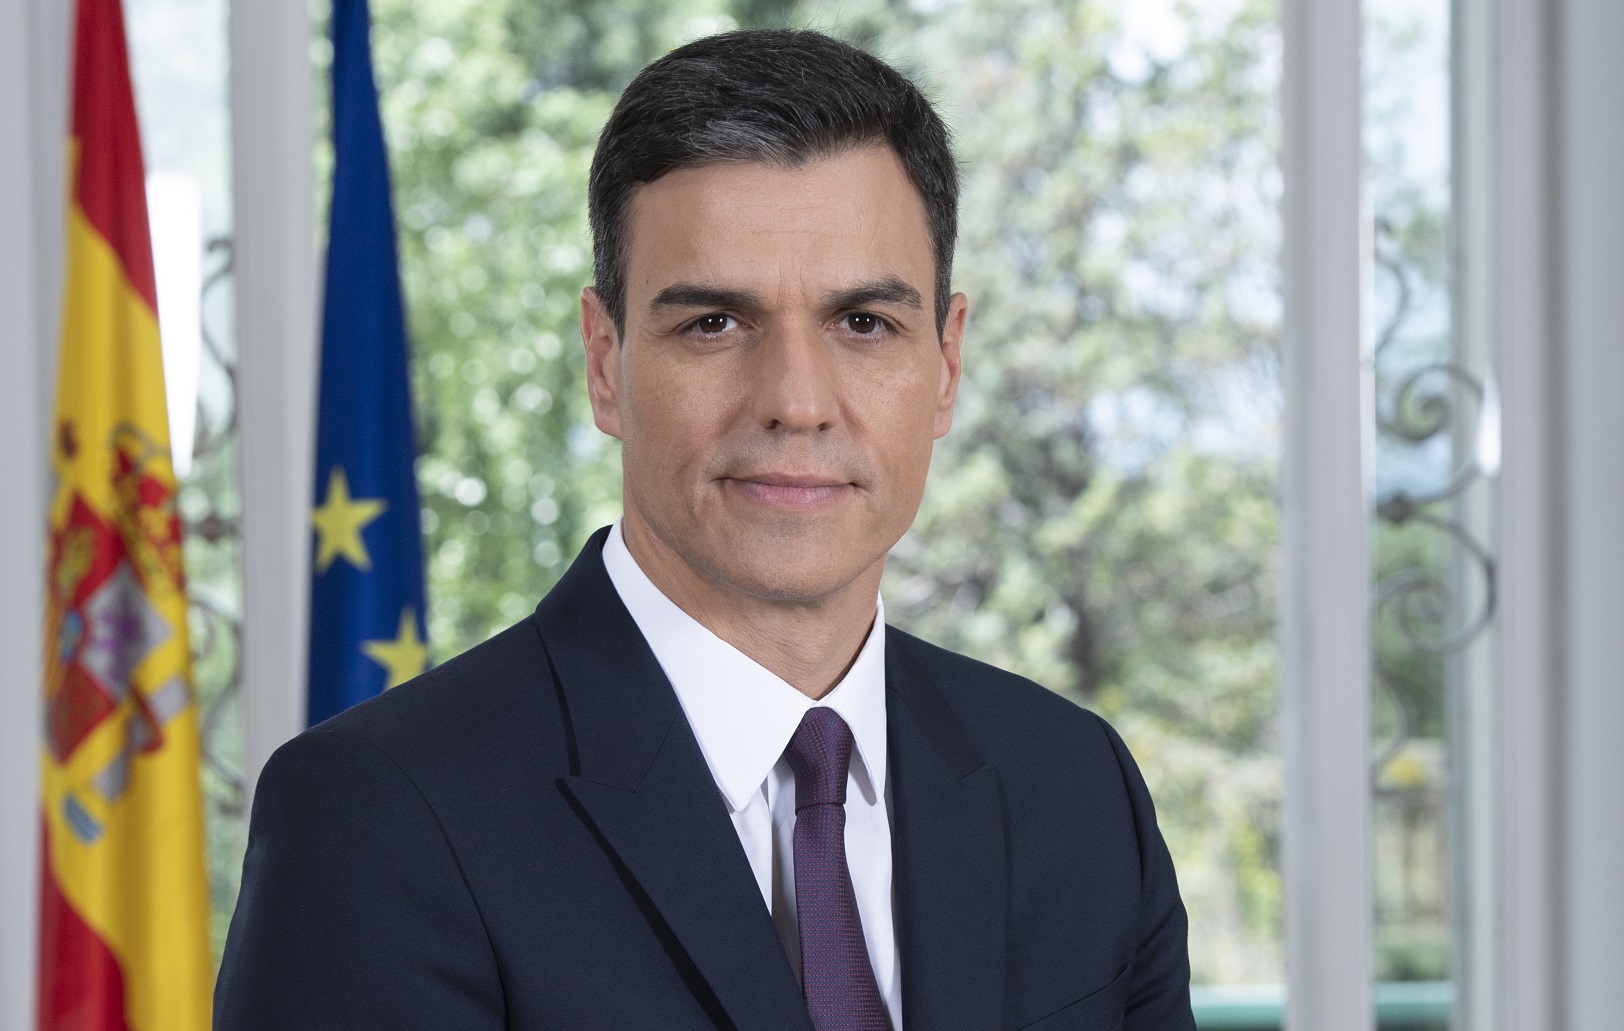 Spanish Prime Minister Pedros Sanchez